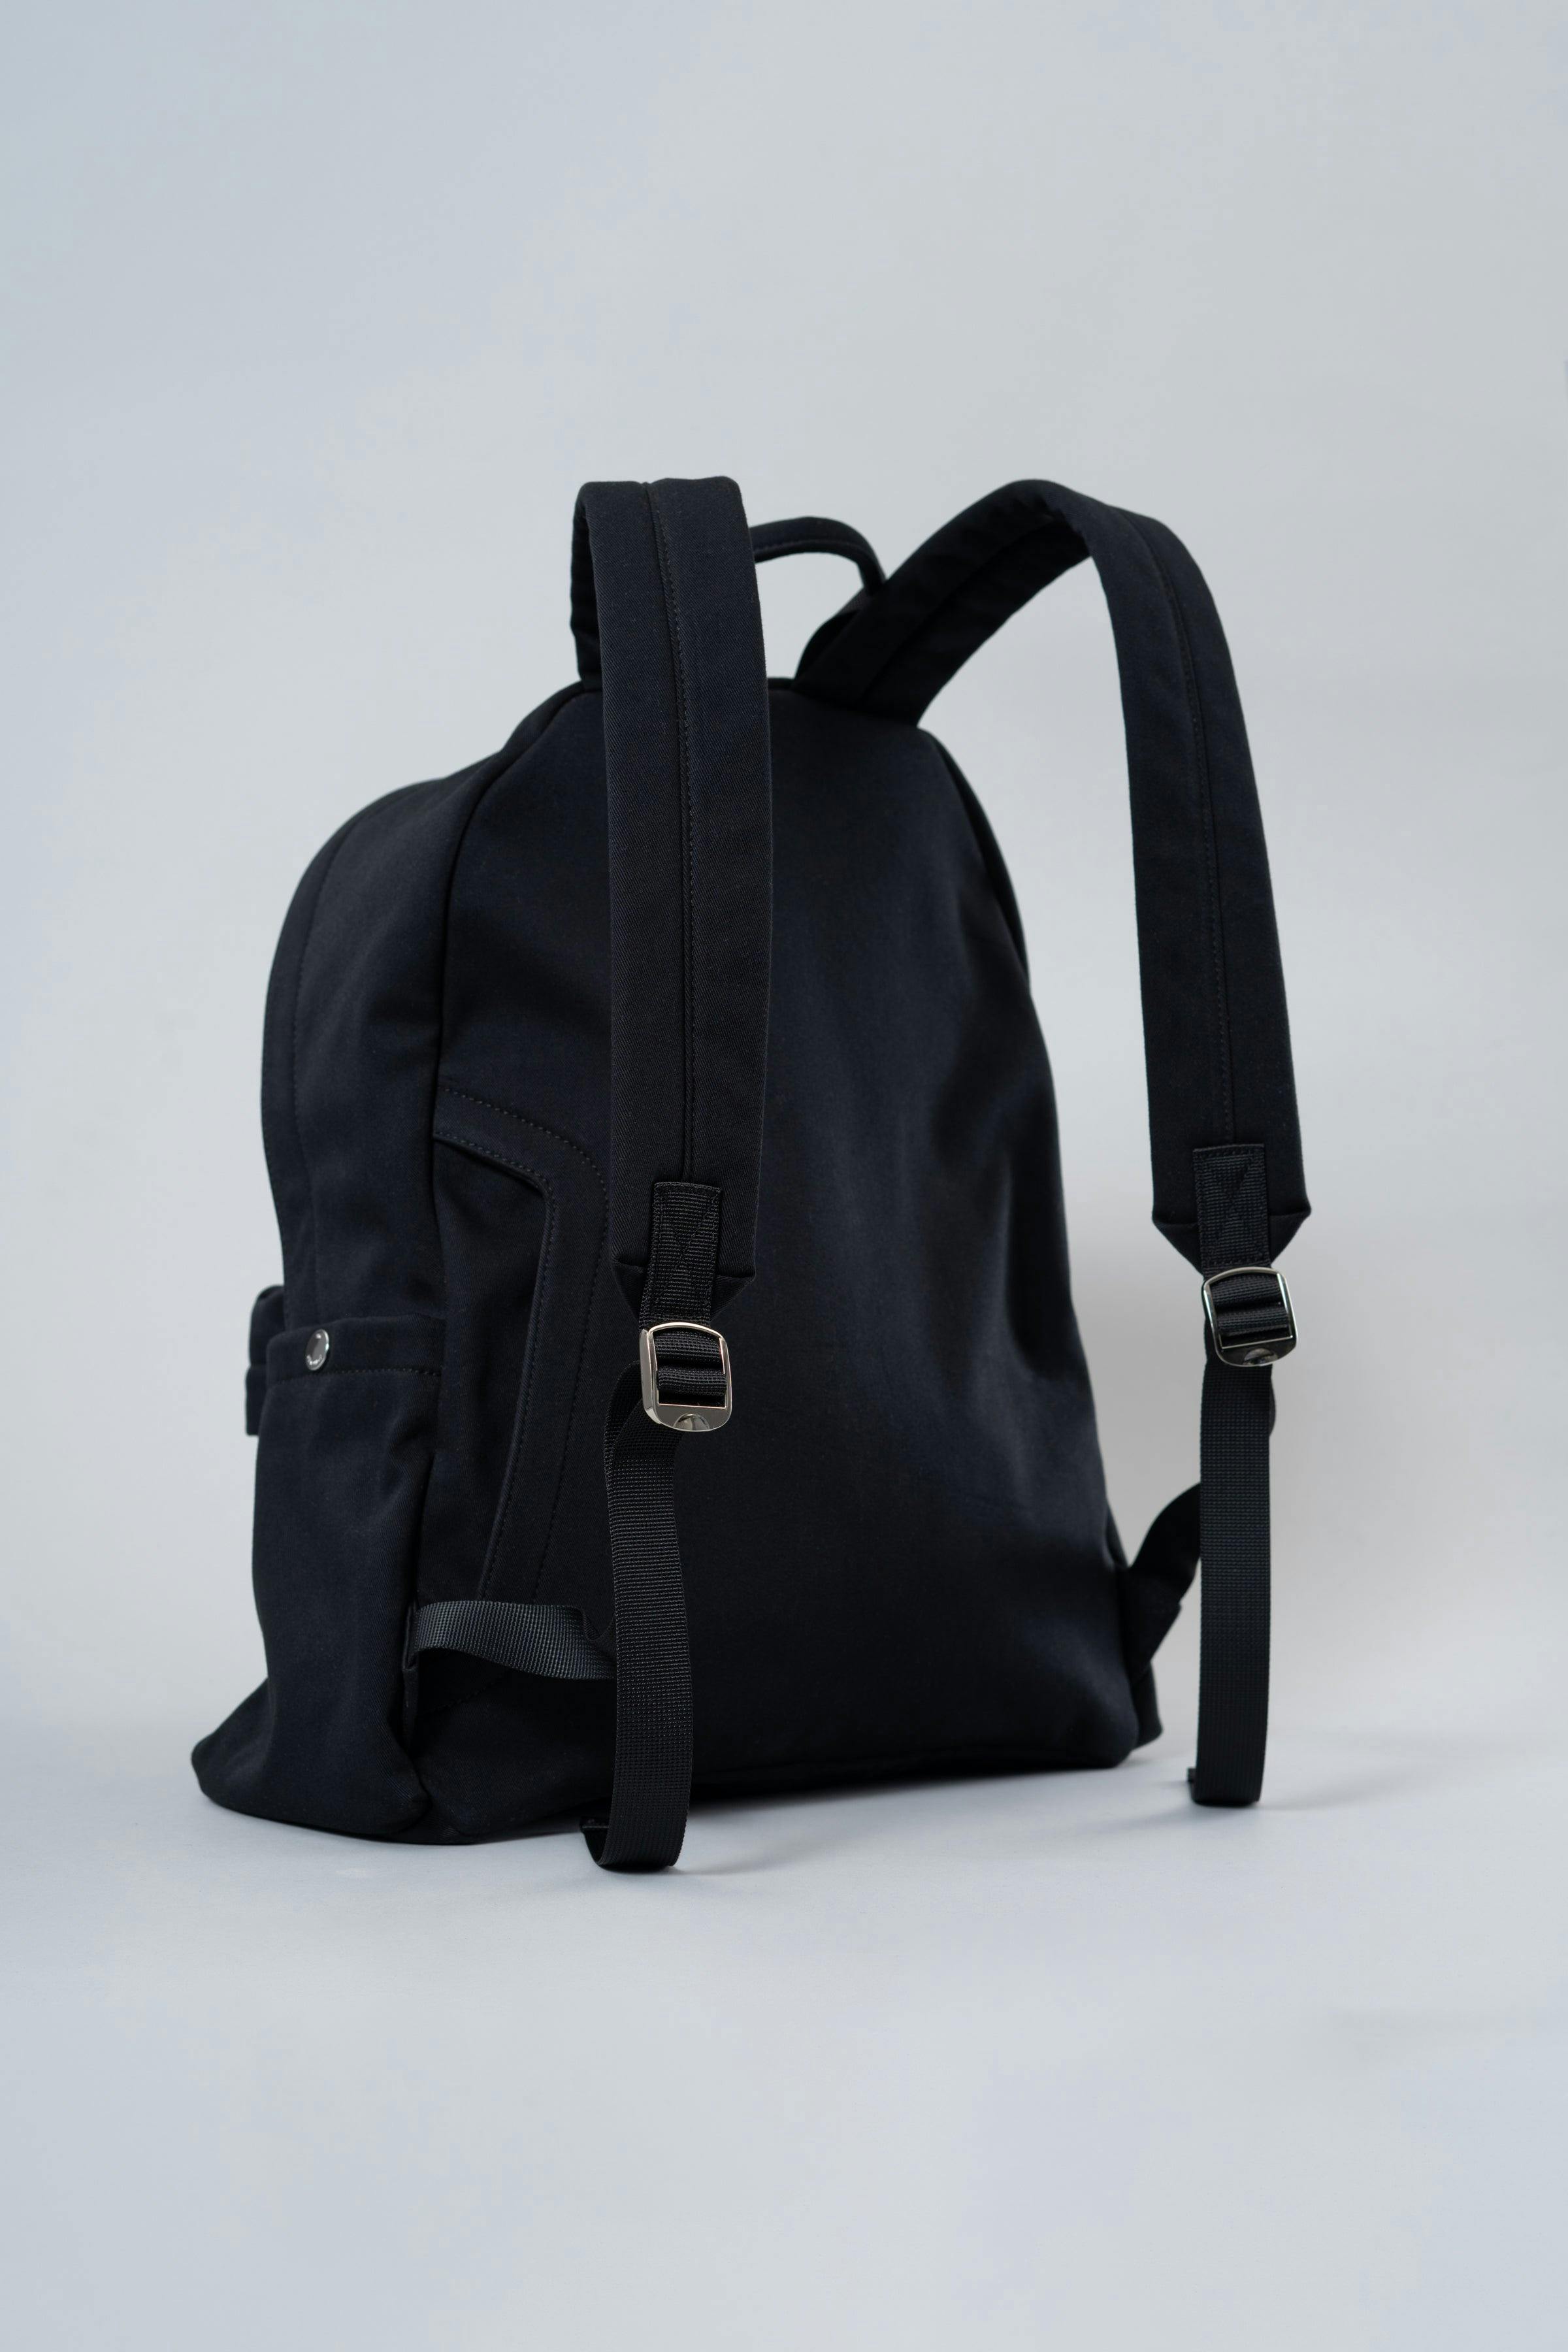 ˝STABILITY˝ Backpack - Plain Black